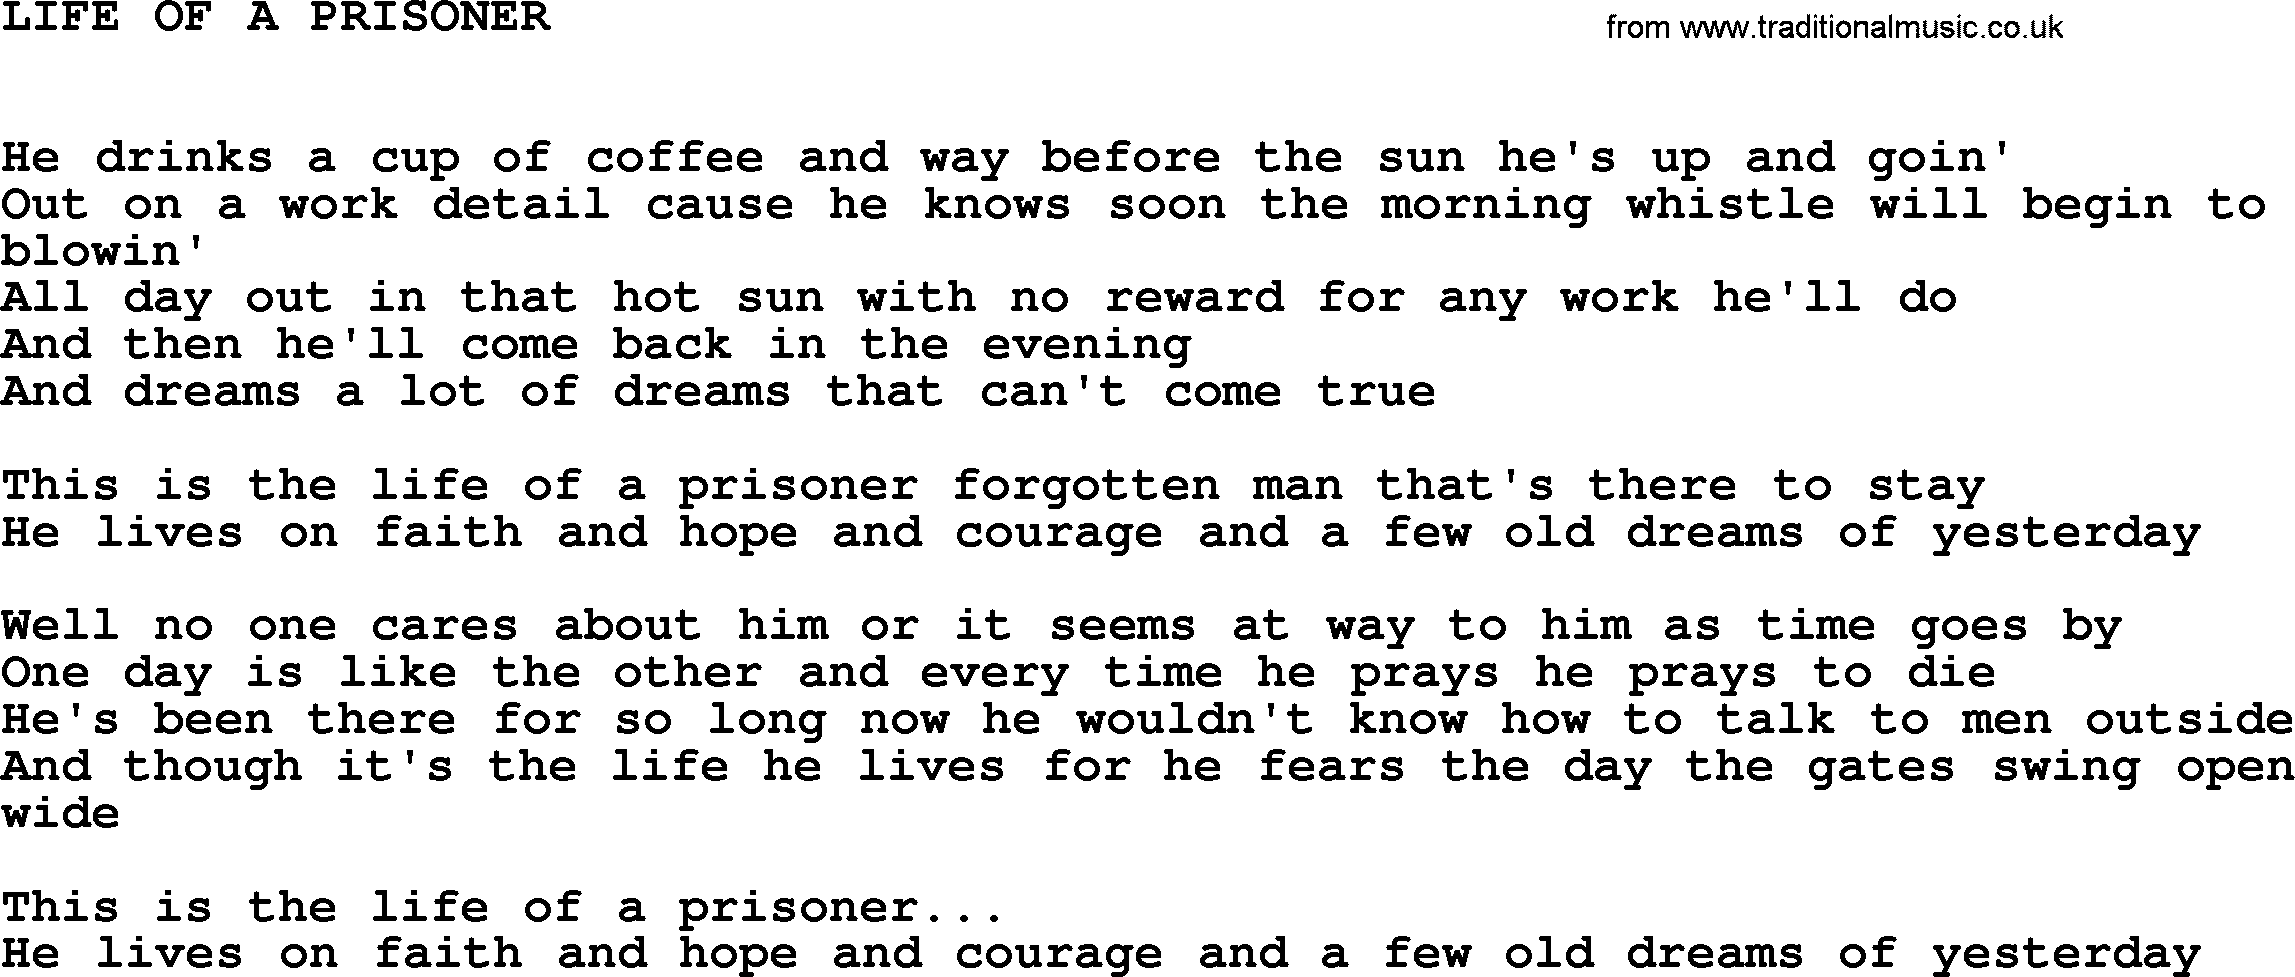 Johnny Cash song Life Of A Prisoner.txt lyrics